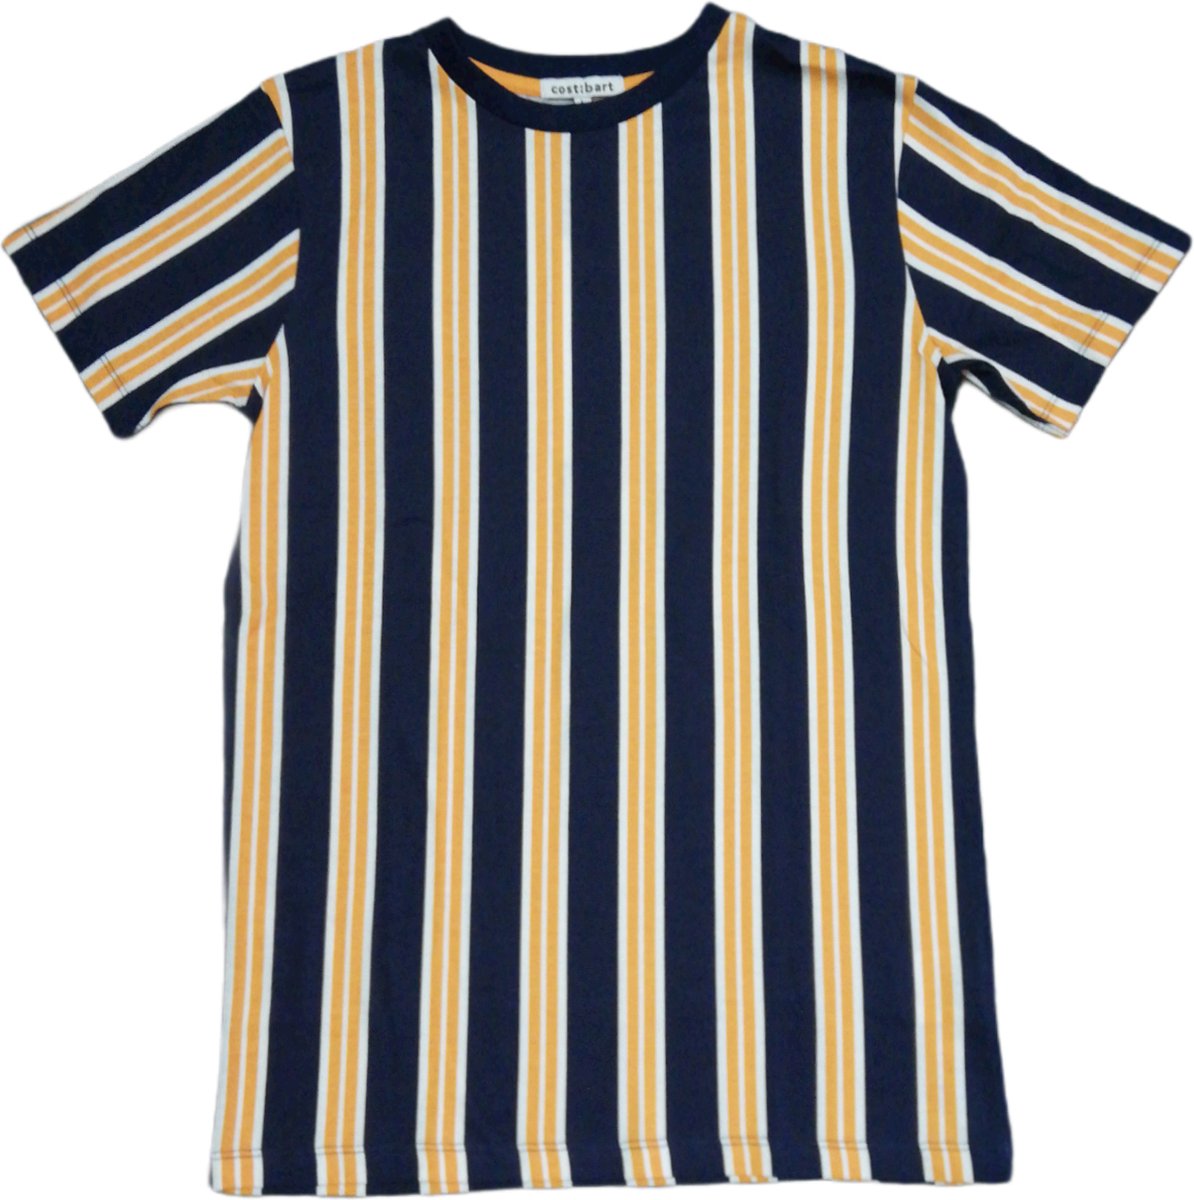 COST BART T-shirt stripes